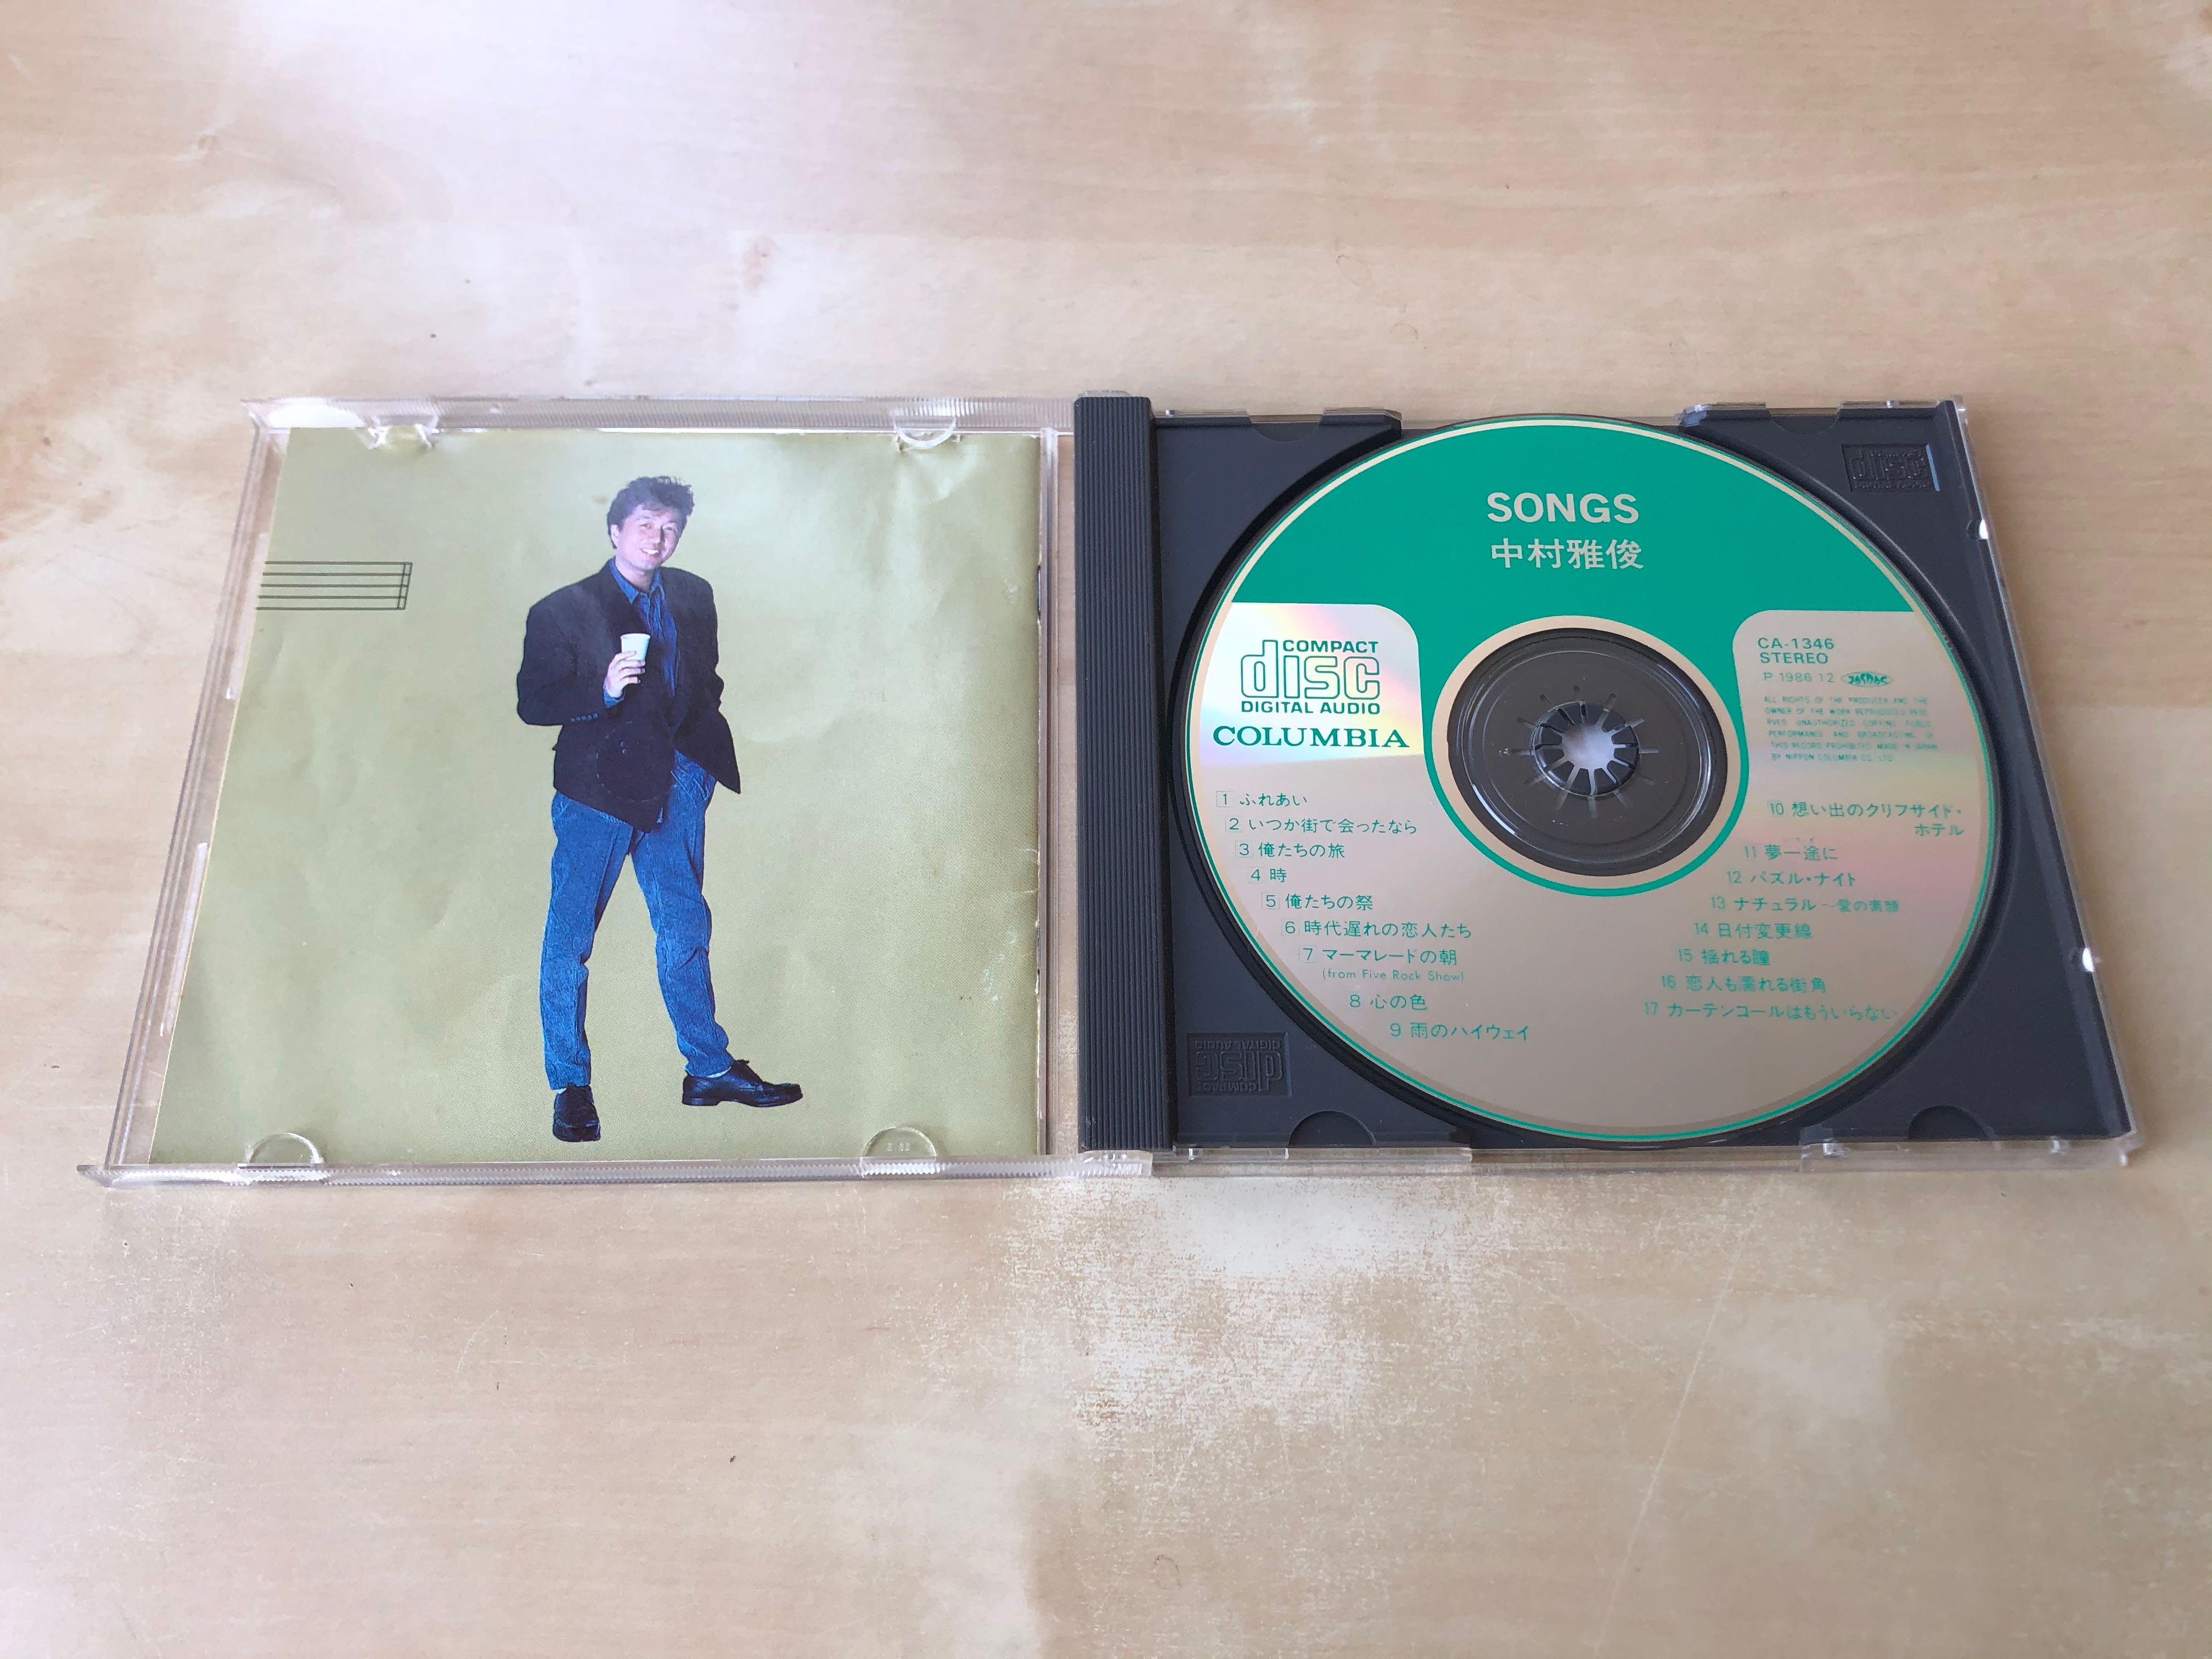 CD丨中村雅俊Nakamura Masatoshi - Songs 精選日本版, 興趣及遊戲 